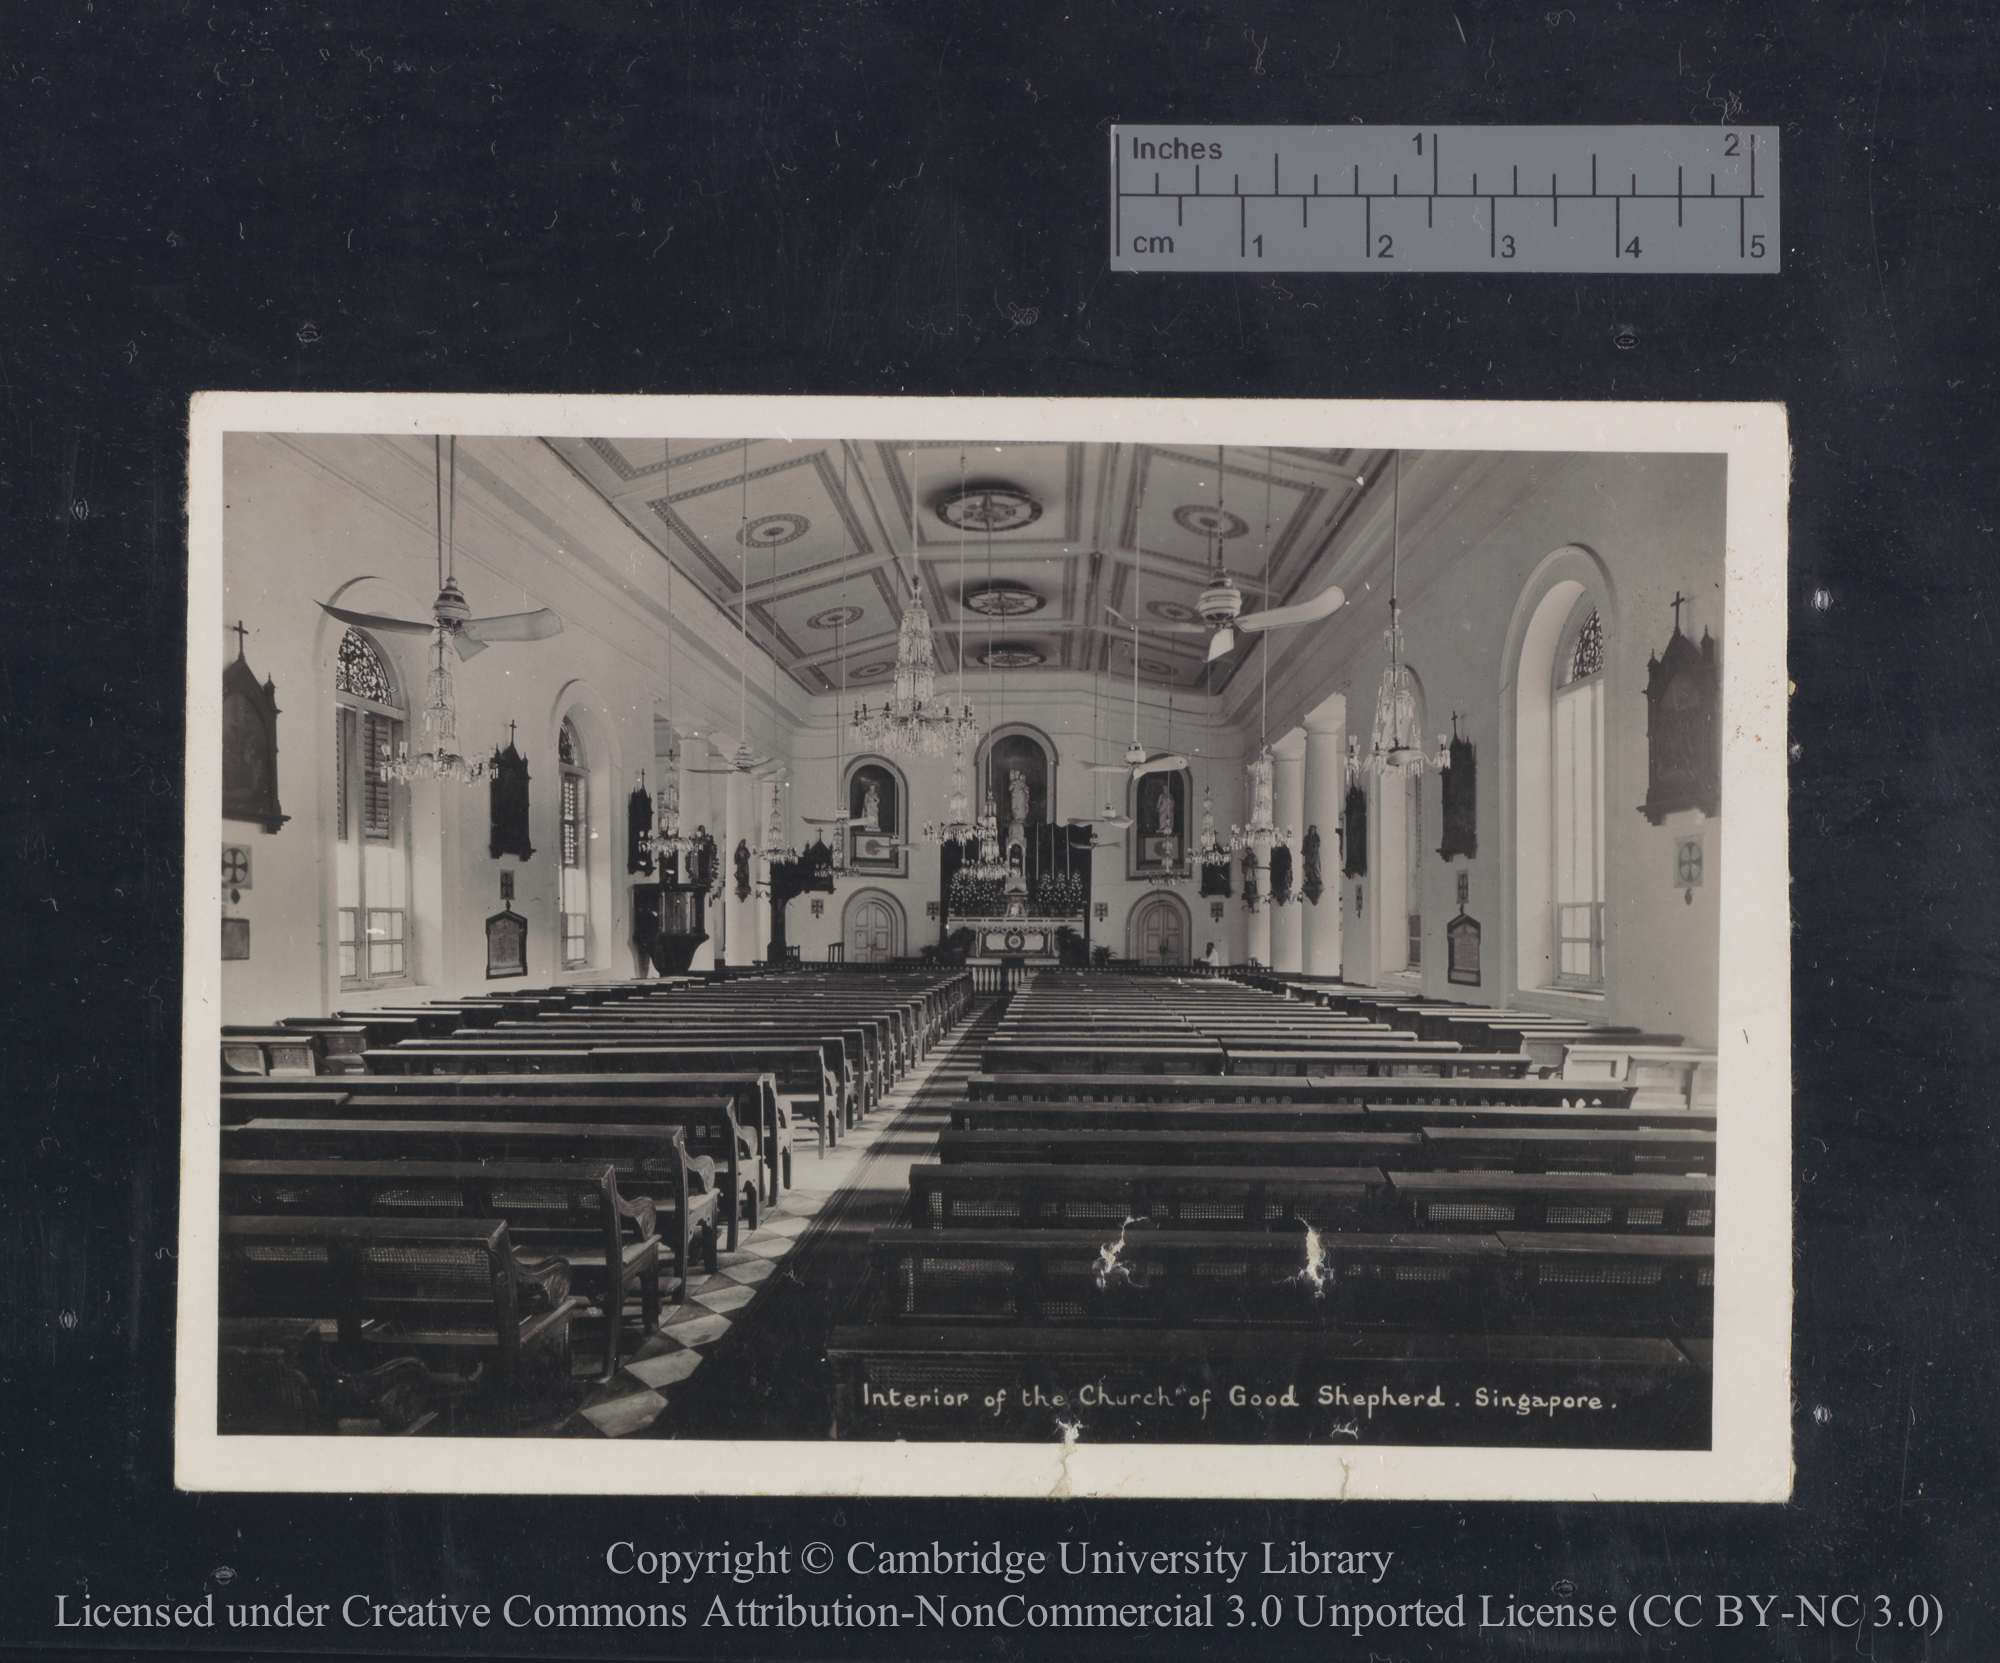 Interior of the Church of Good Shepherd, Singapore, 1930 - 1939